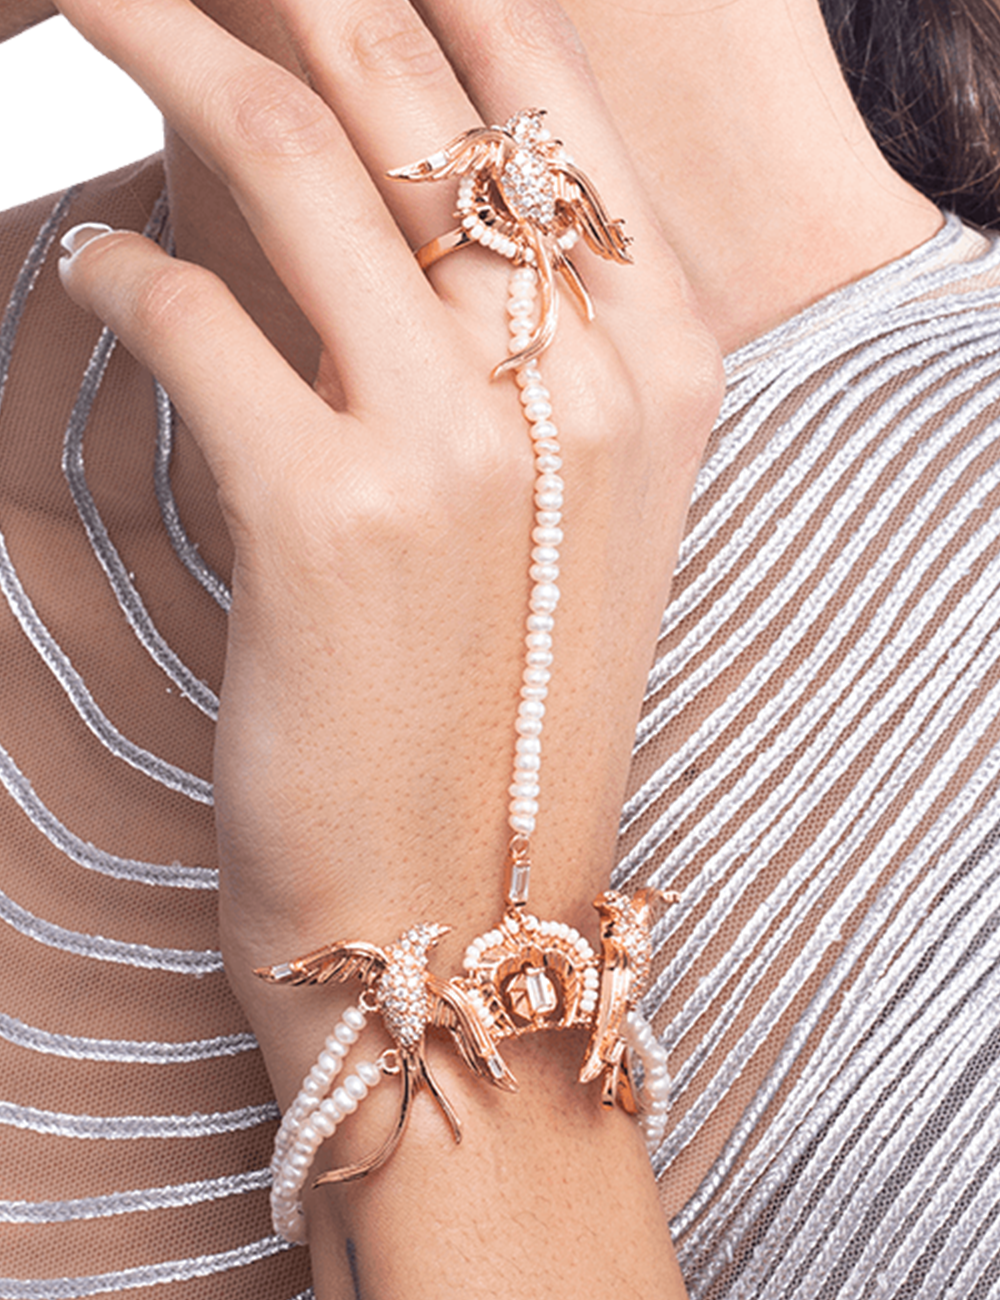 Indian Pakistani Hathphool, Gold Bridal Hand Piece Panja Adjustable Bracelet  Ring, Ring Bracelet, Antique Bracelet, Hath Phool, Hathphool - Etsy |  Bangles jewelry designs, Antique style jewelry, Wedding jewelry sets